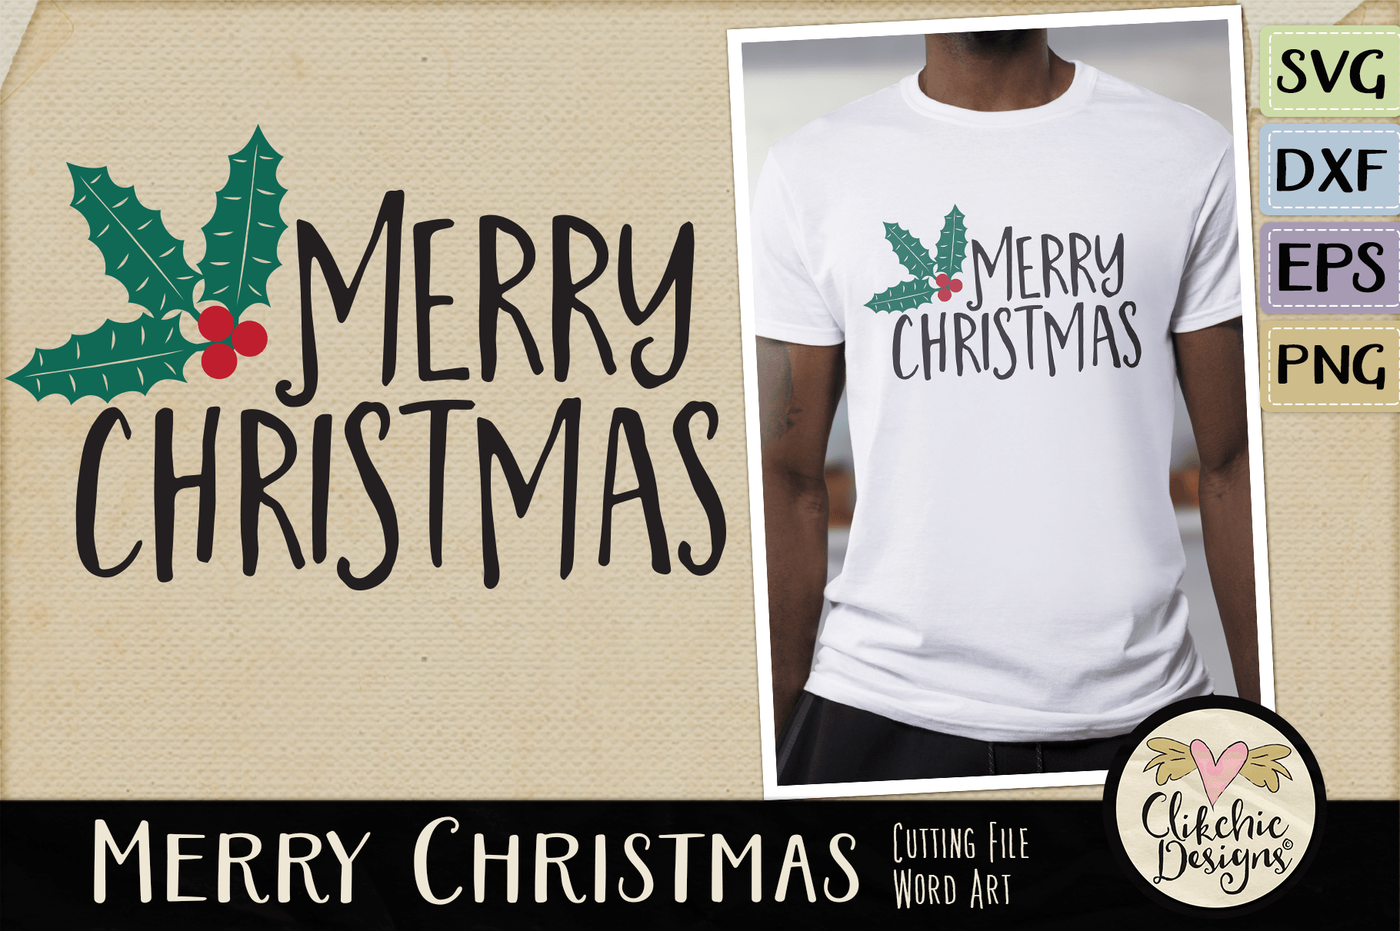 Merry Christmas Svg Word Art Vector Cutting File By Clikchic Designs Thehungryjpeg Com